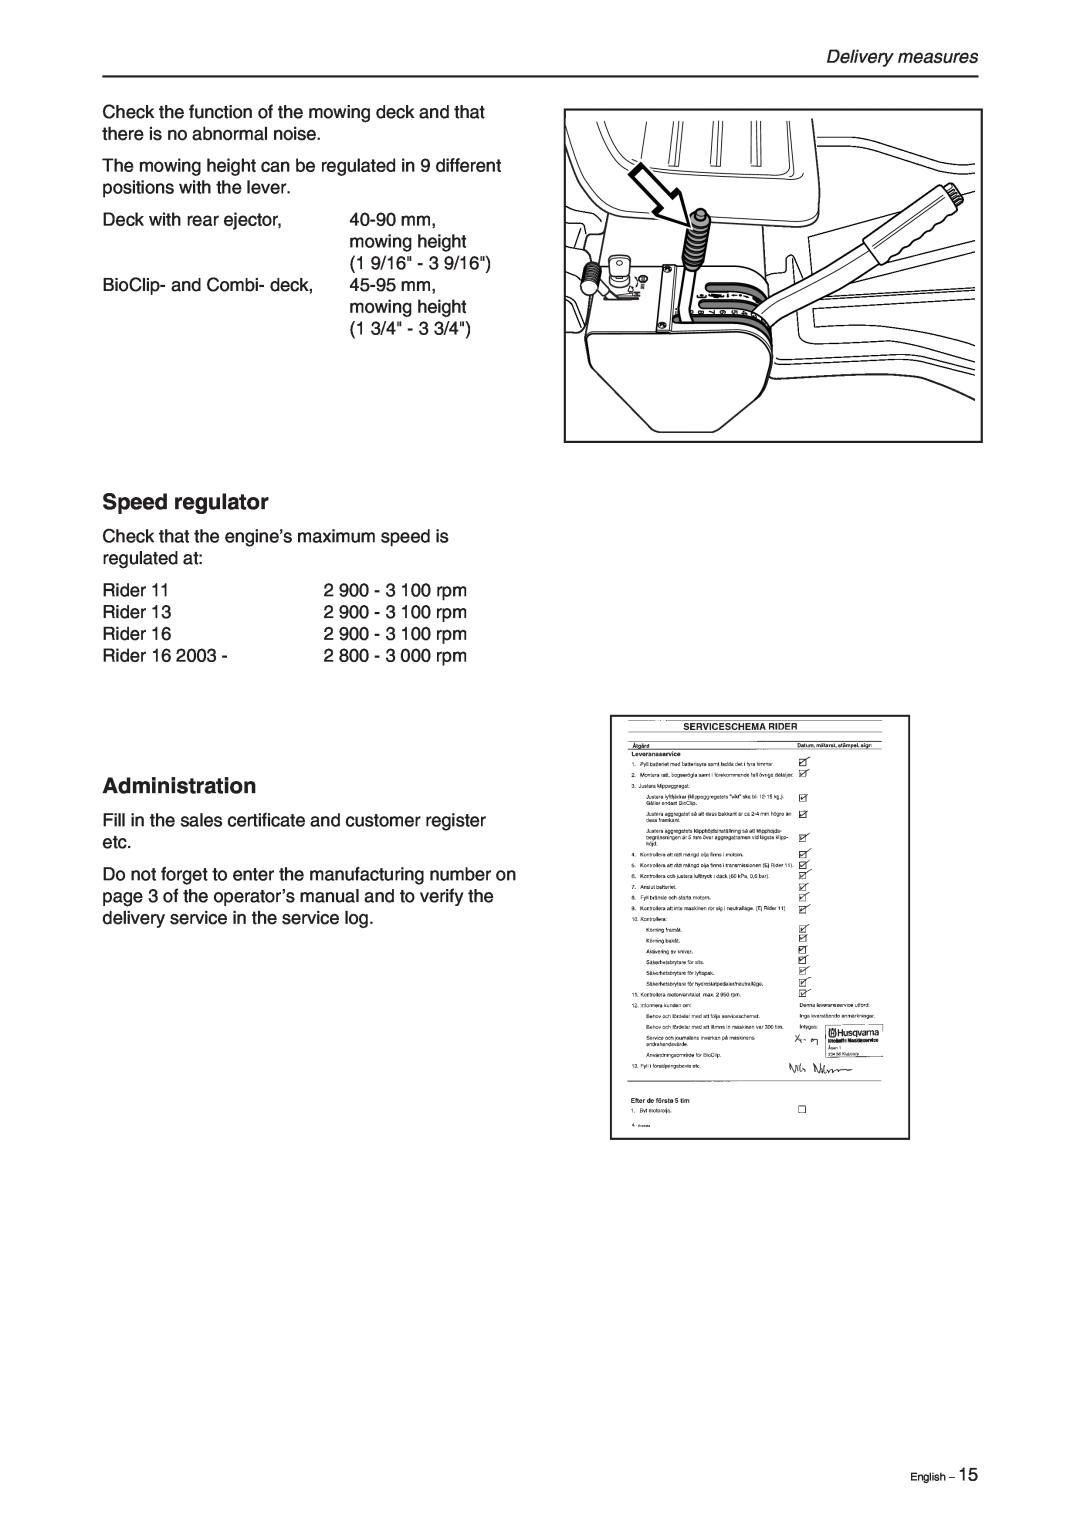 Briggs & Stratton RIDER 16, RIDER 11 BIO, RIDER 13 BIO manual Speed regulator, Administration, Delivery measures 